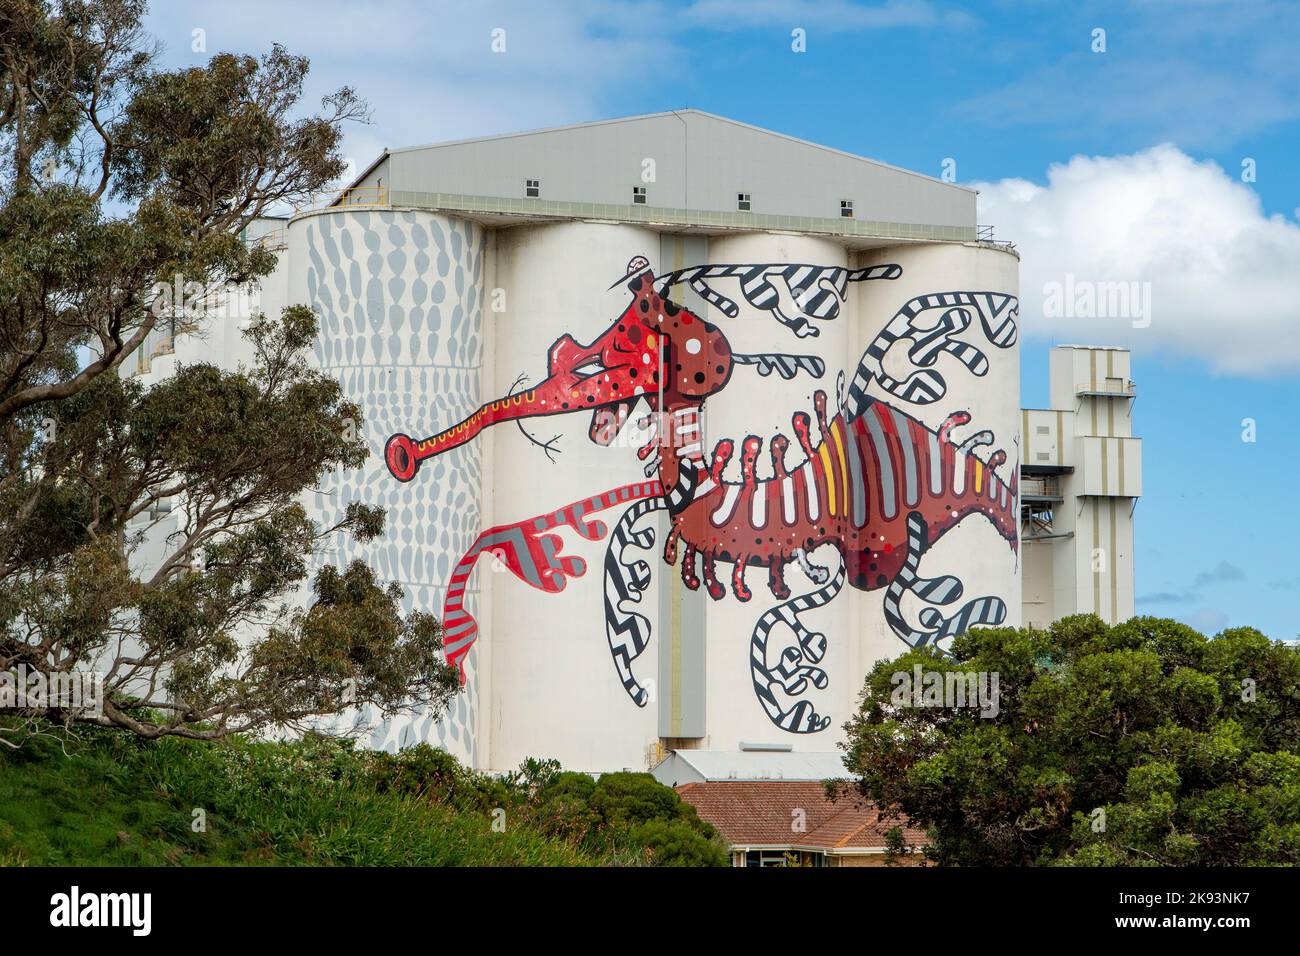 Red Dragon Silo Art, Albany, WA, Australia Stock Photo